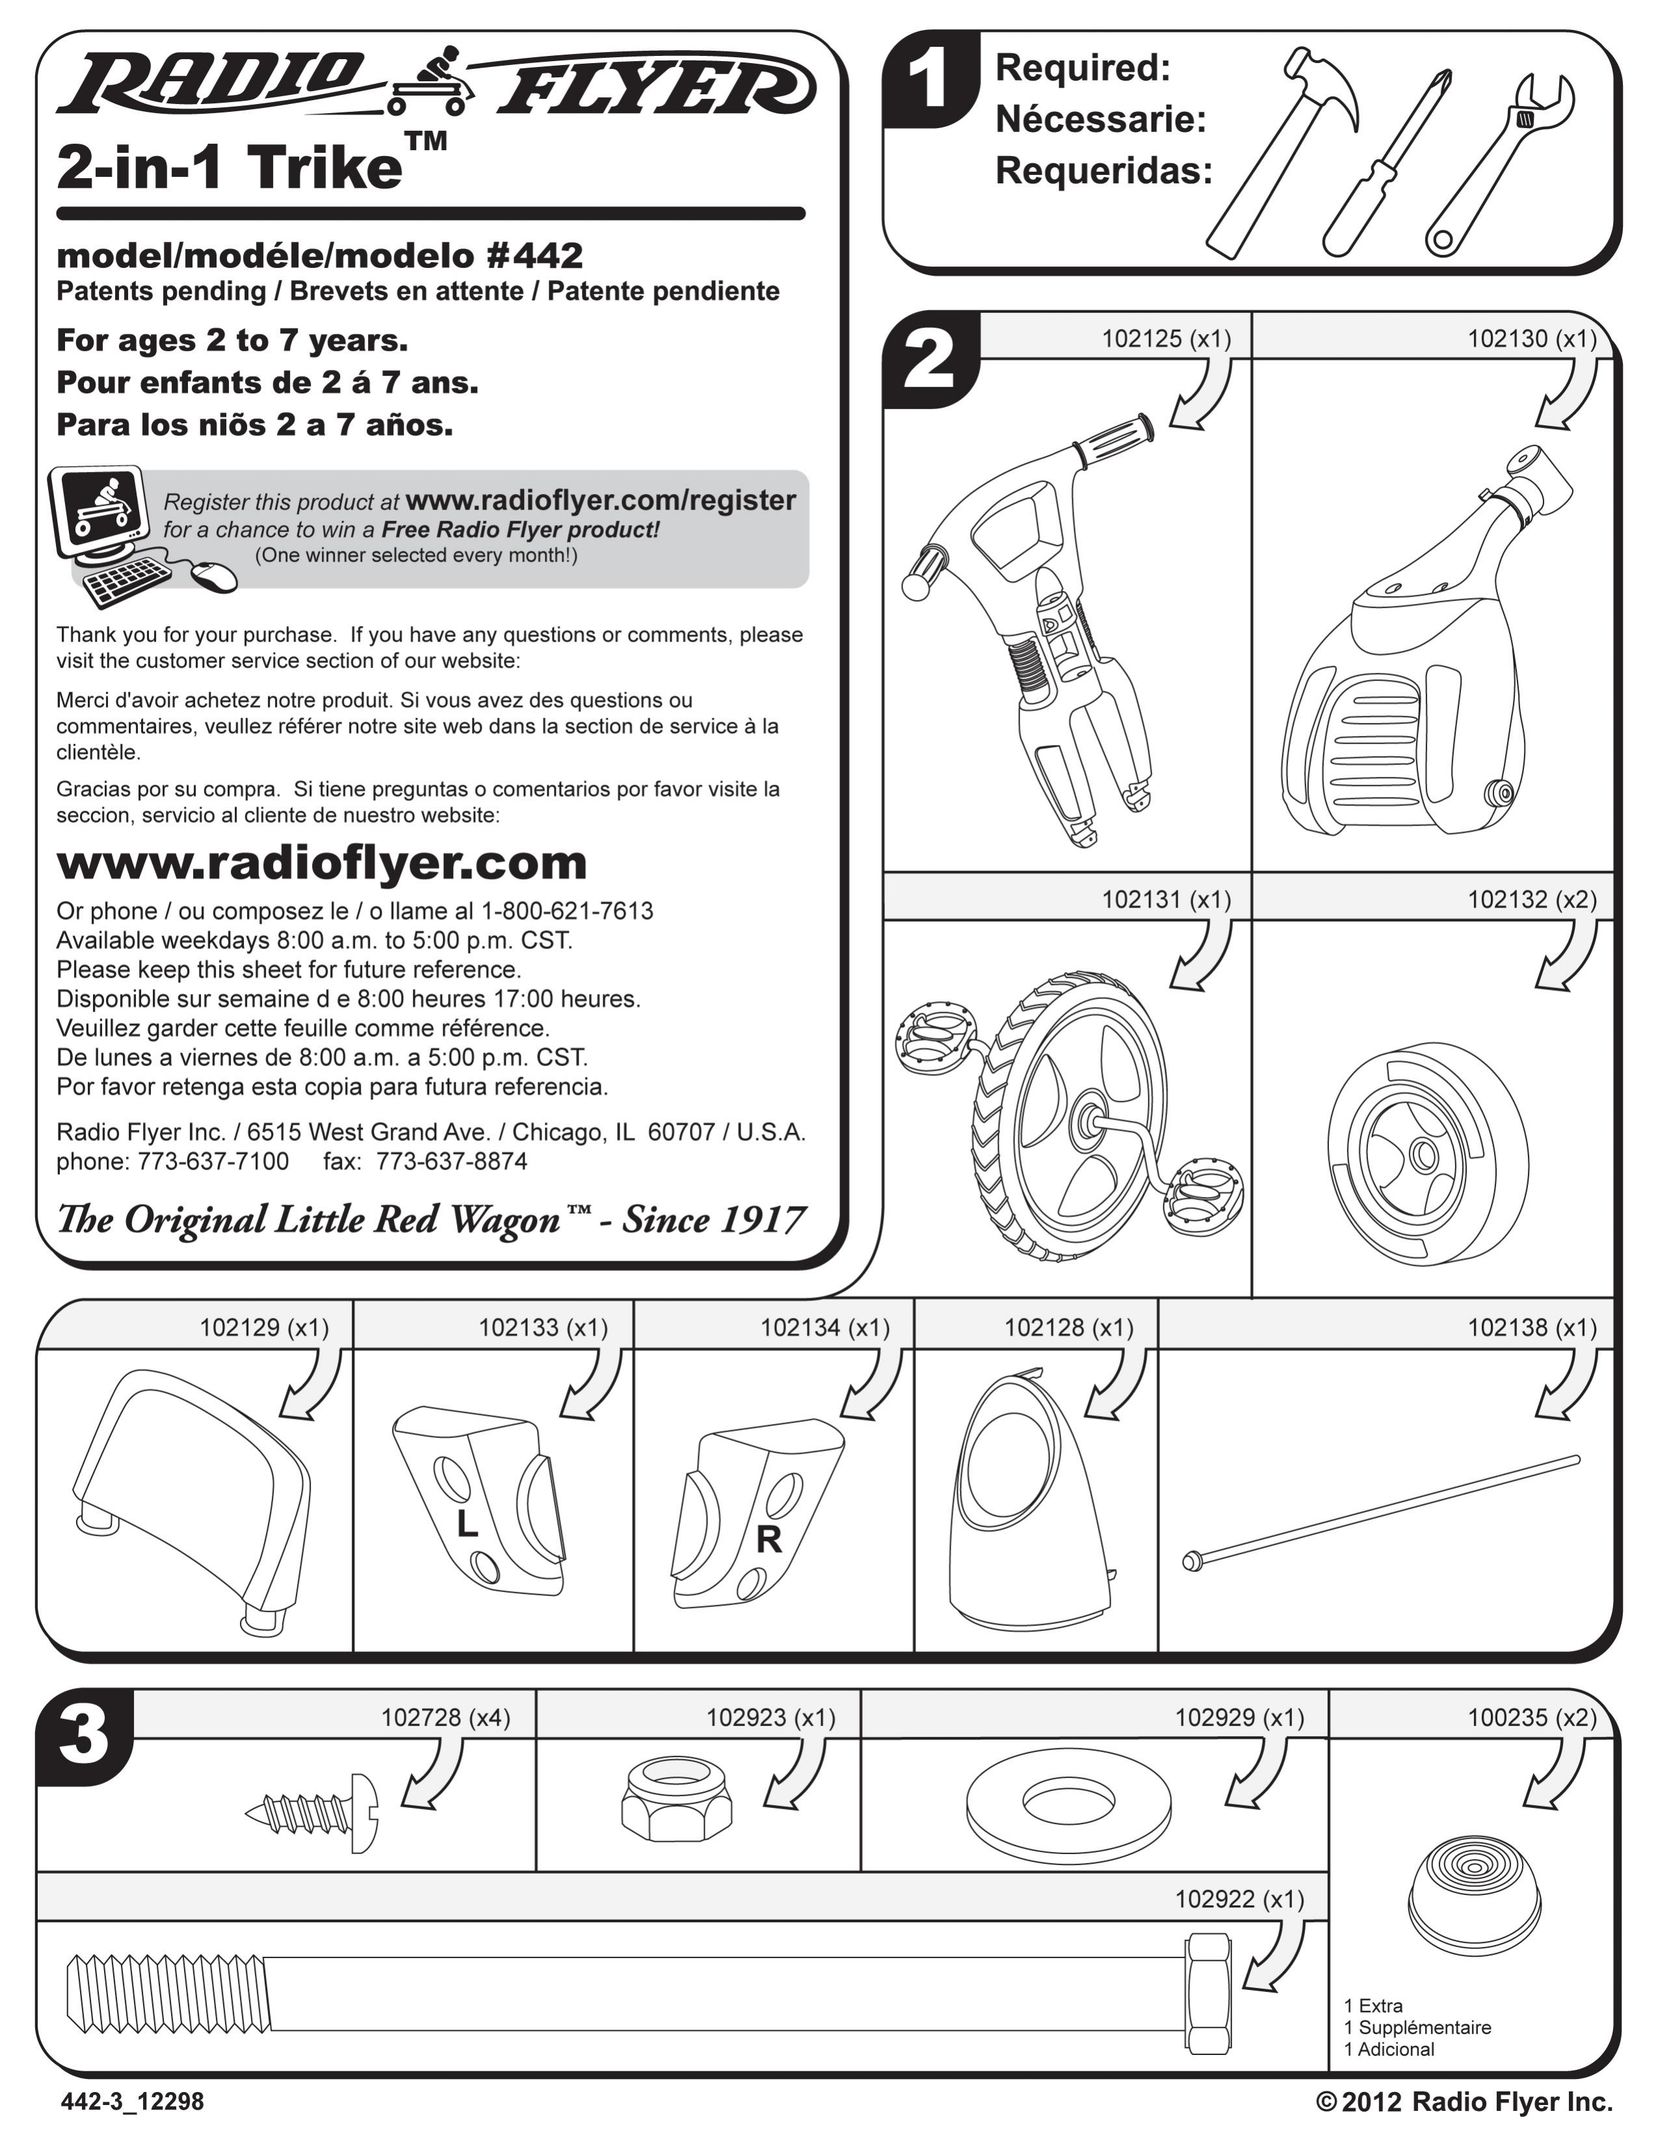 Radio Flyer 442 Riding Toy User Manual